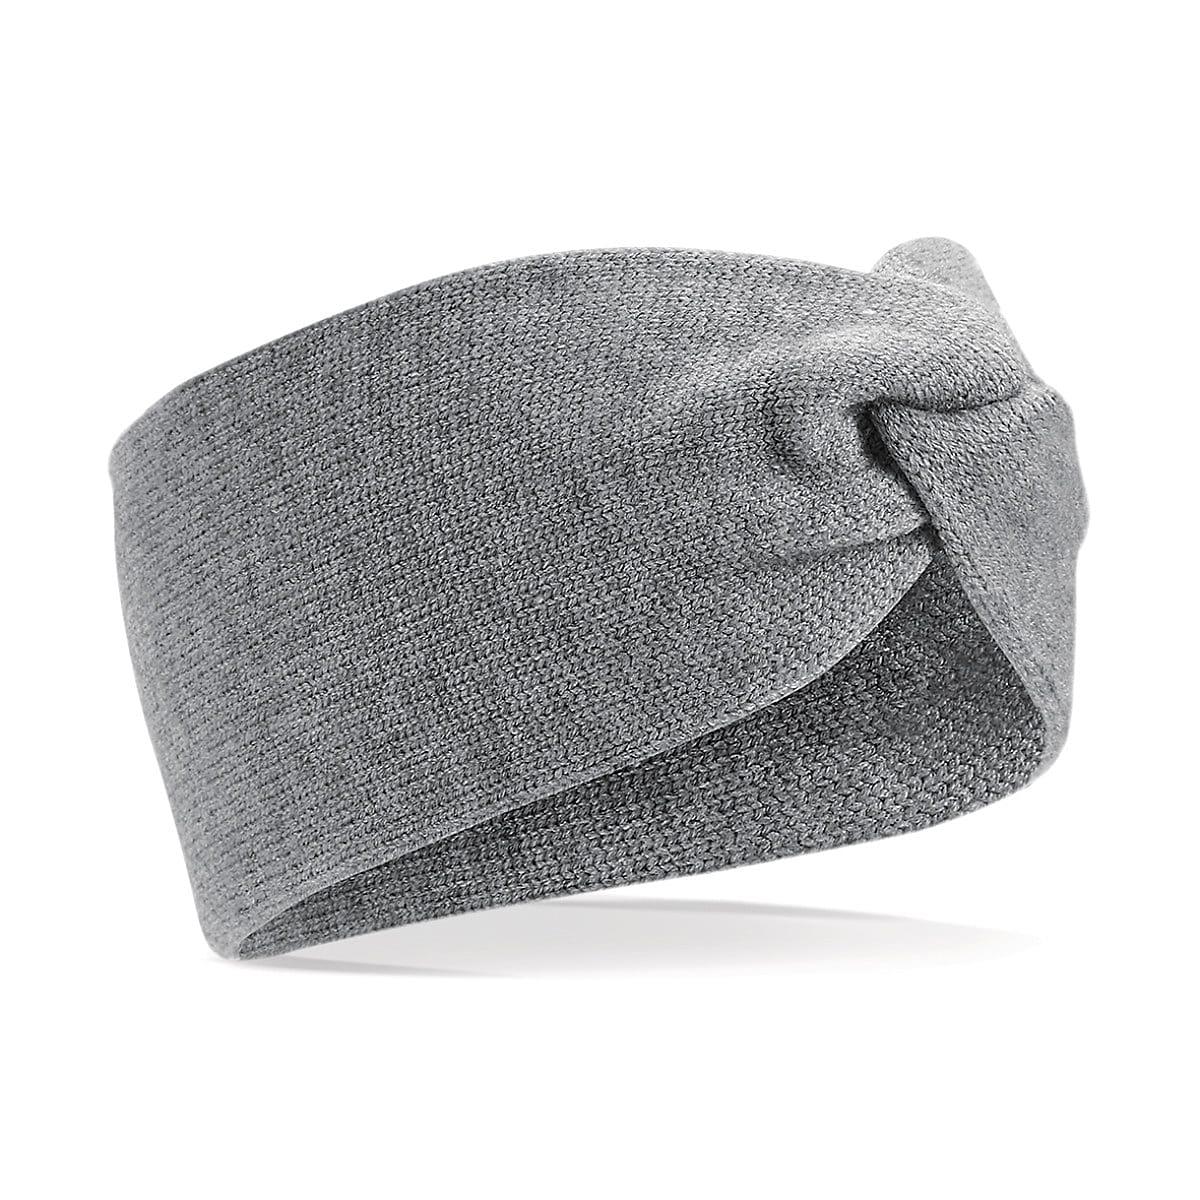 Beechfield Twist Knit Headband in Grey Marl (Product Code: B432)